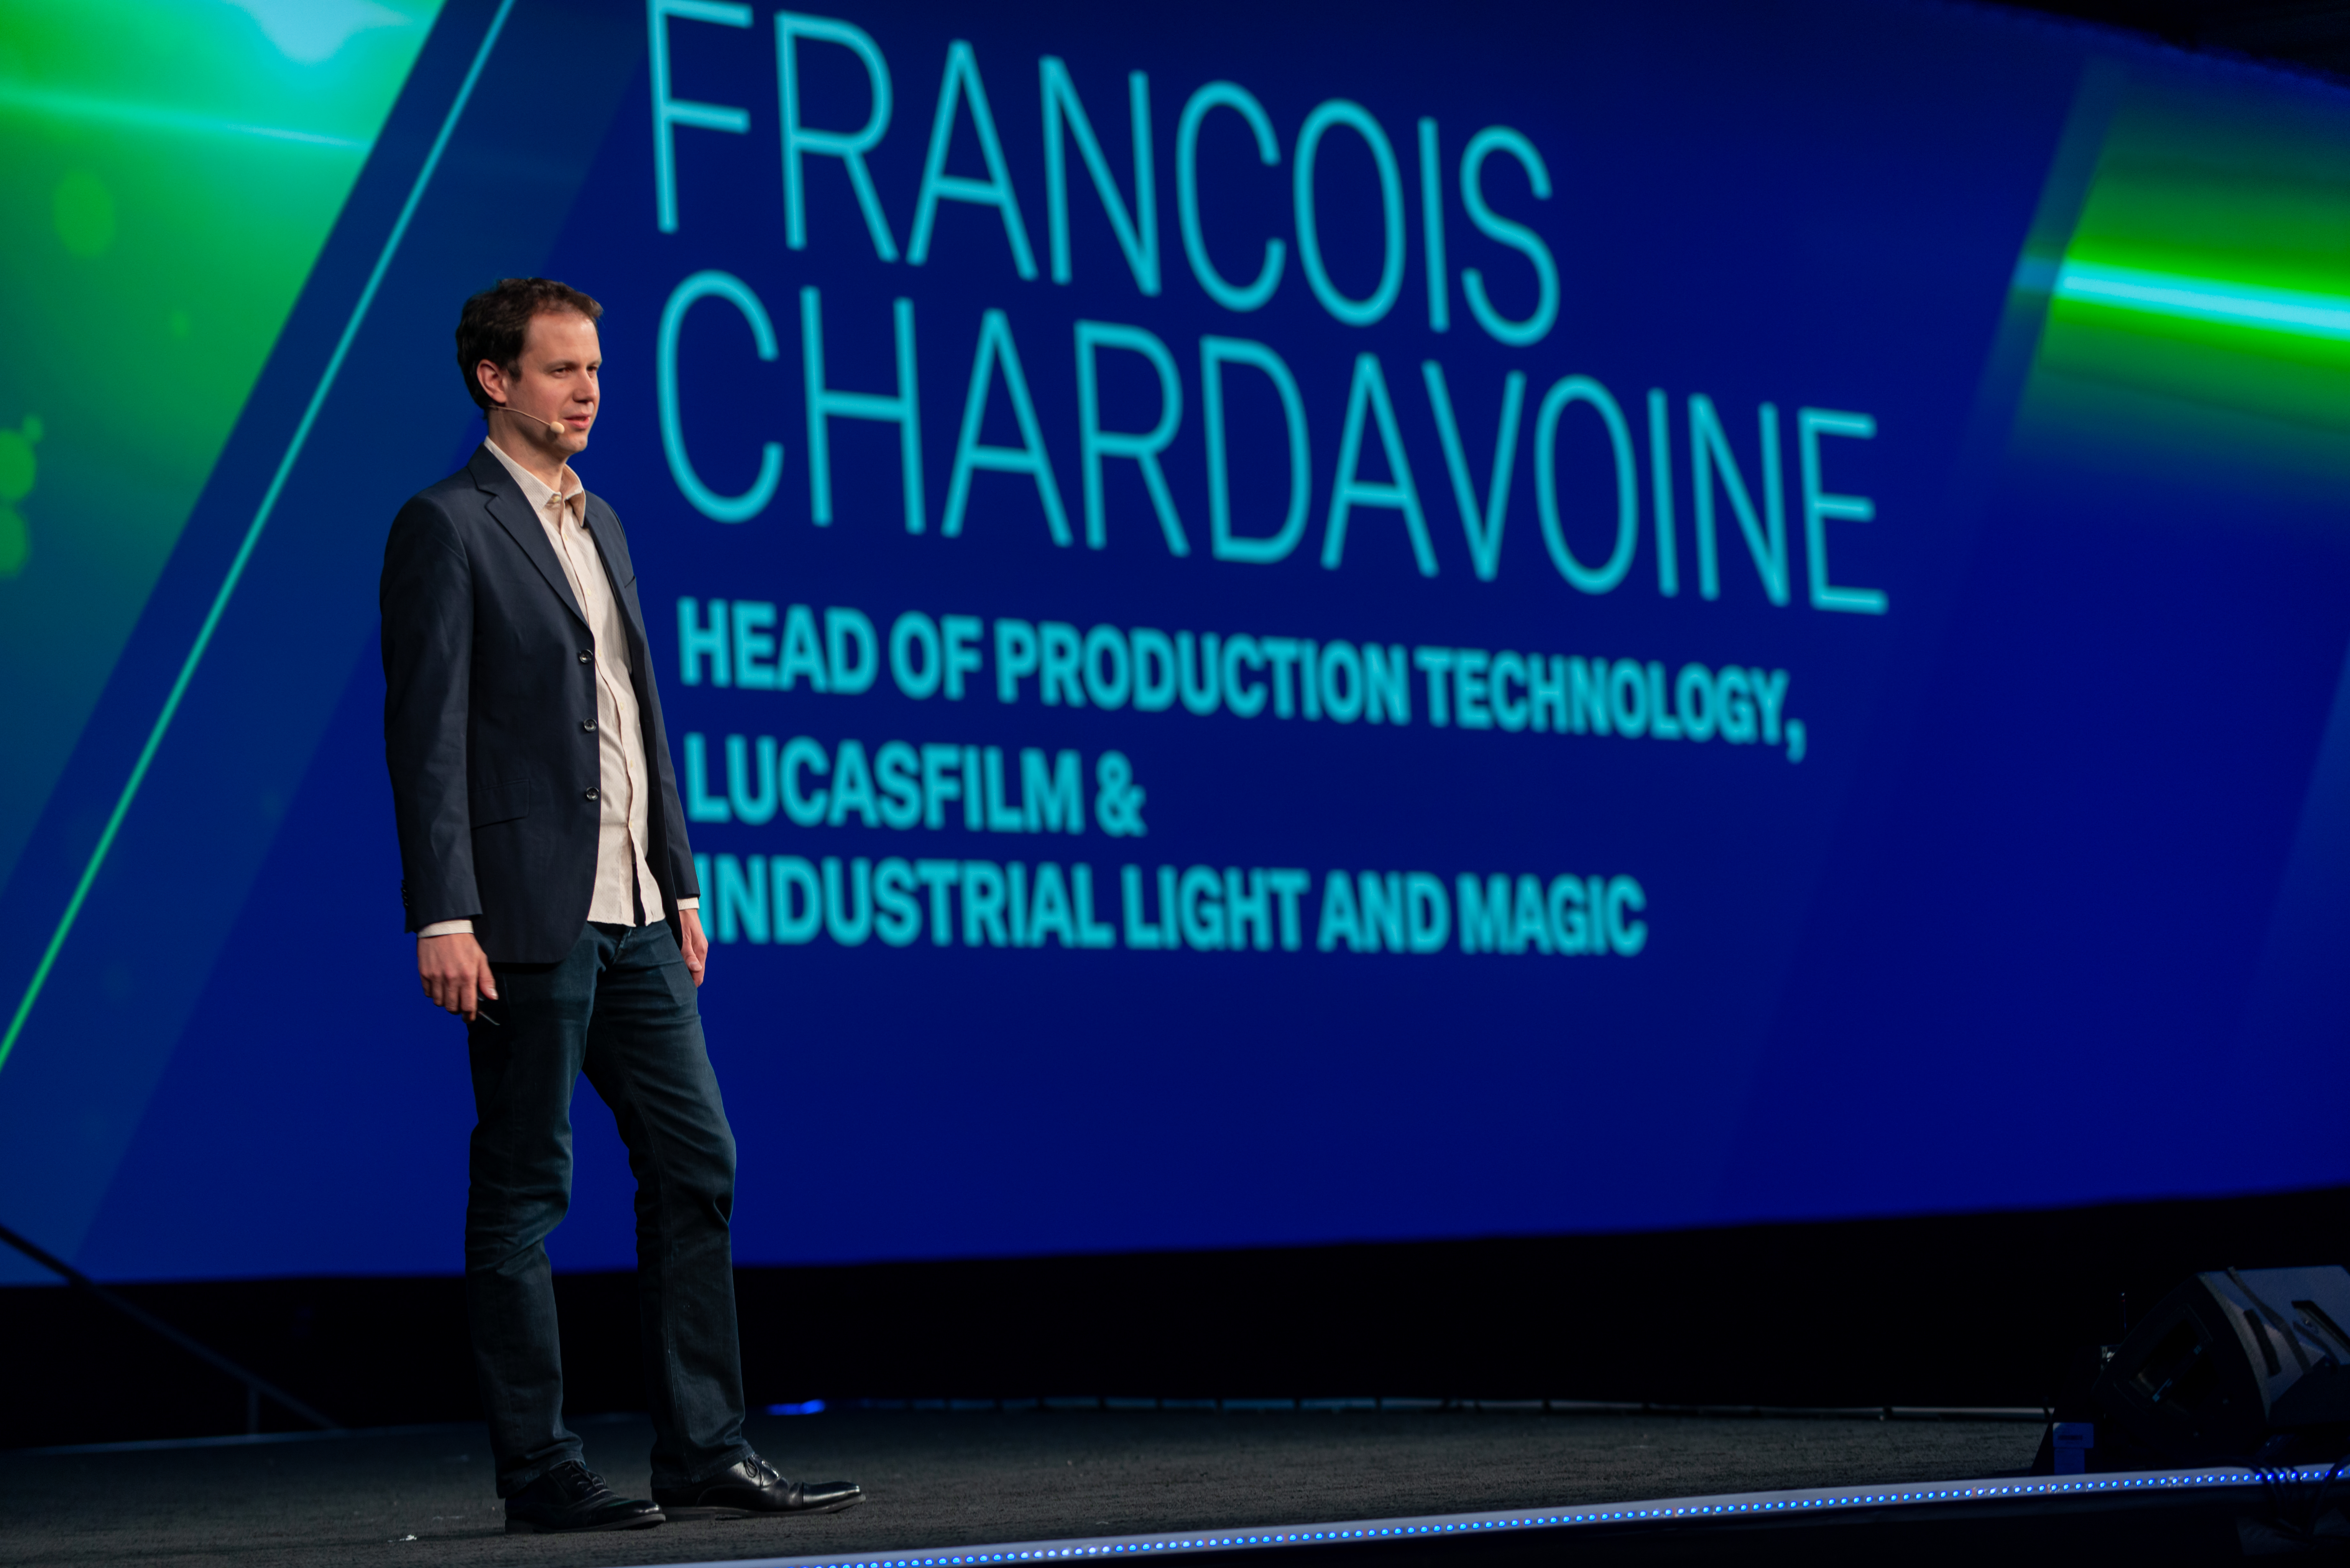           Francois Chardavoine gives a Keynote presentation at HxGN Live 2019 in Las Vegas